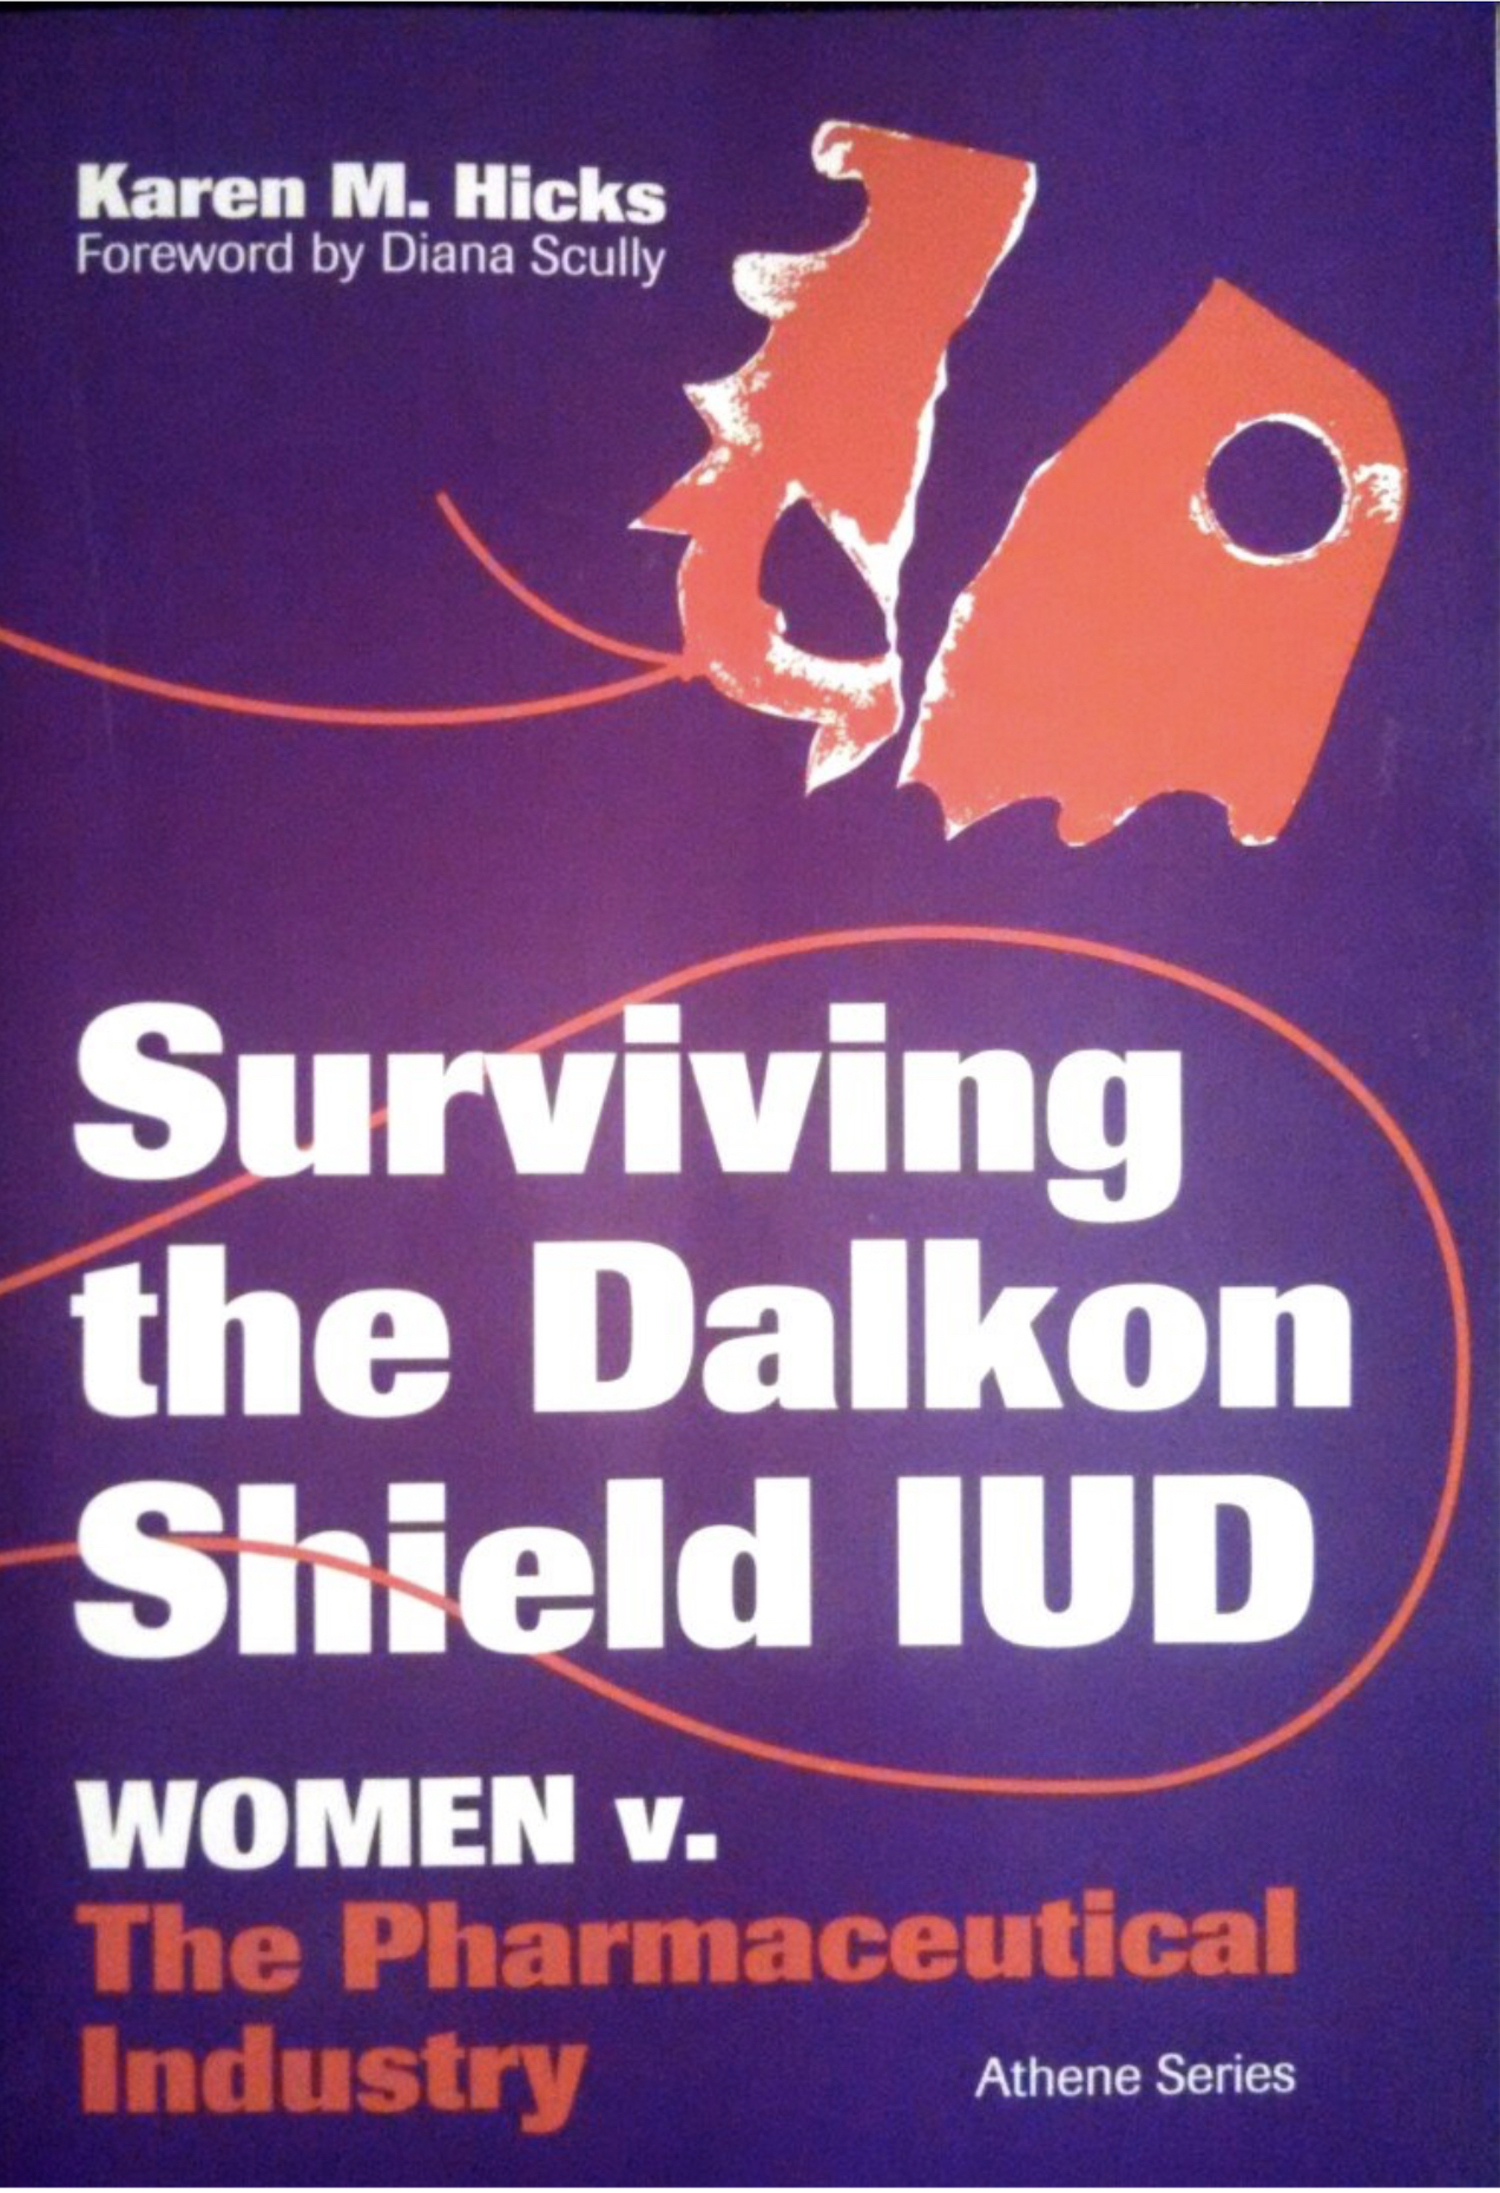 Surviving Dalkon Shield by Karen Hicks - 1994